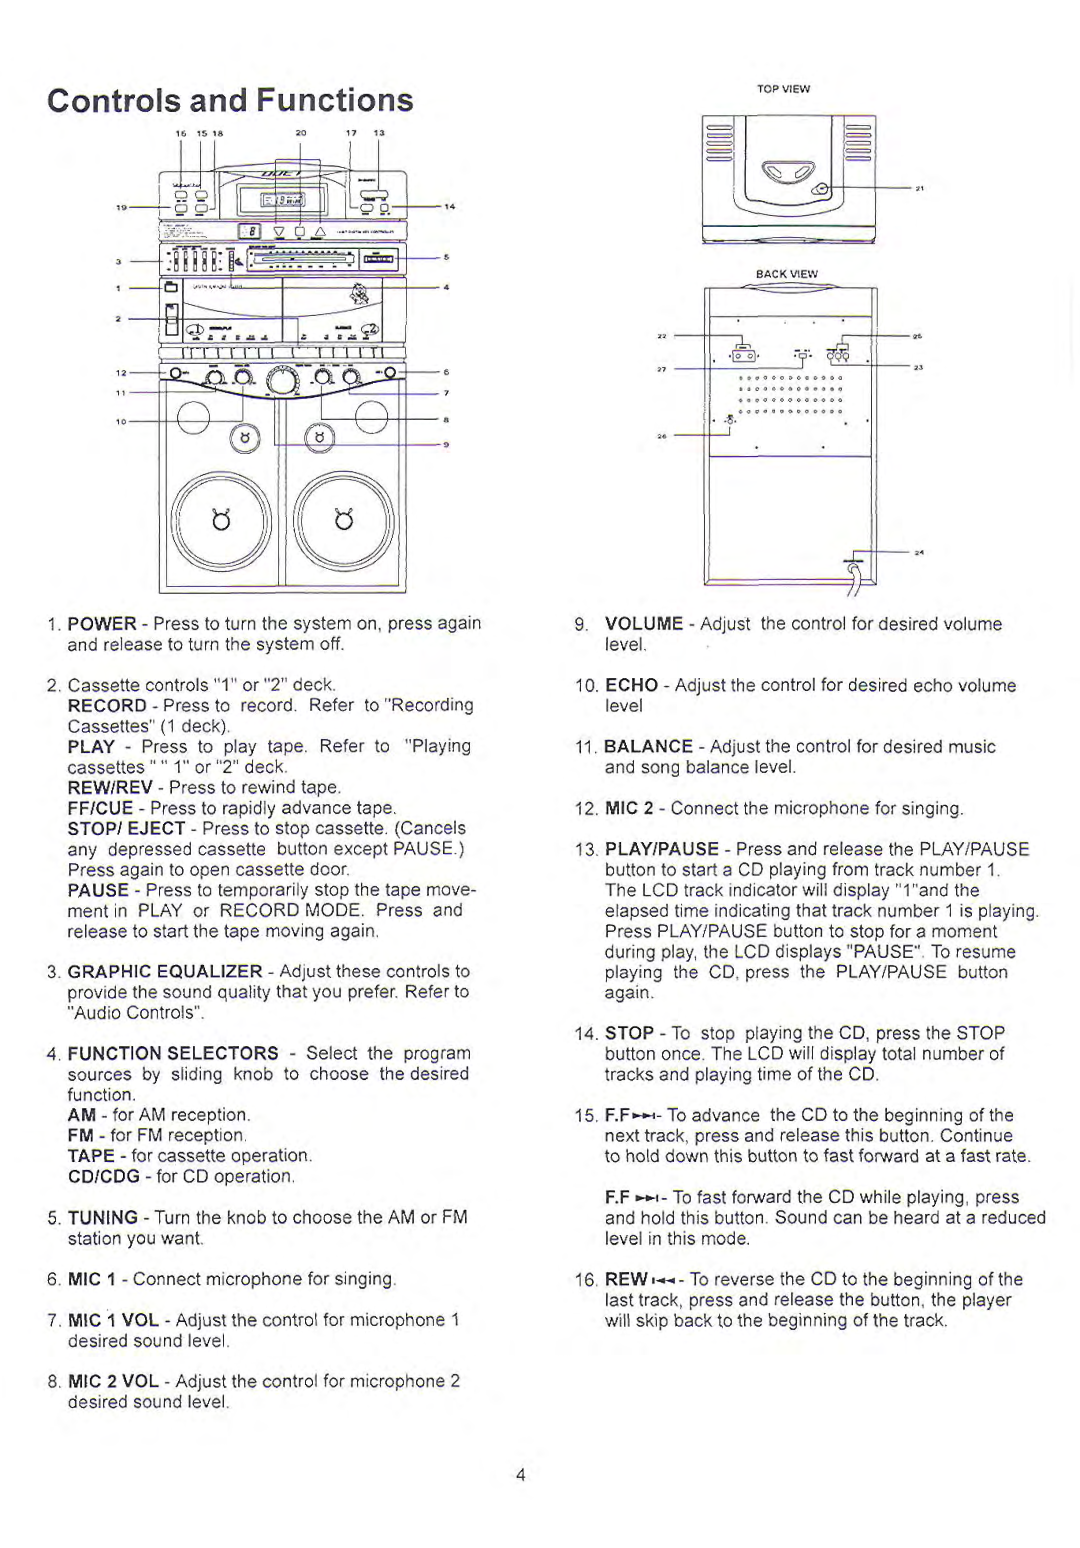 VocoPro 890 manual 